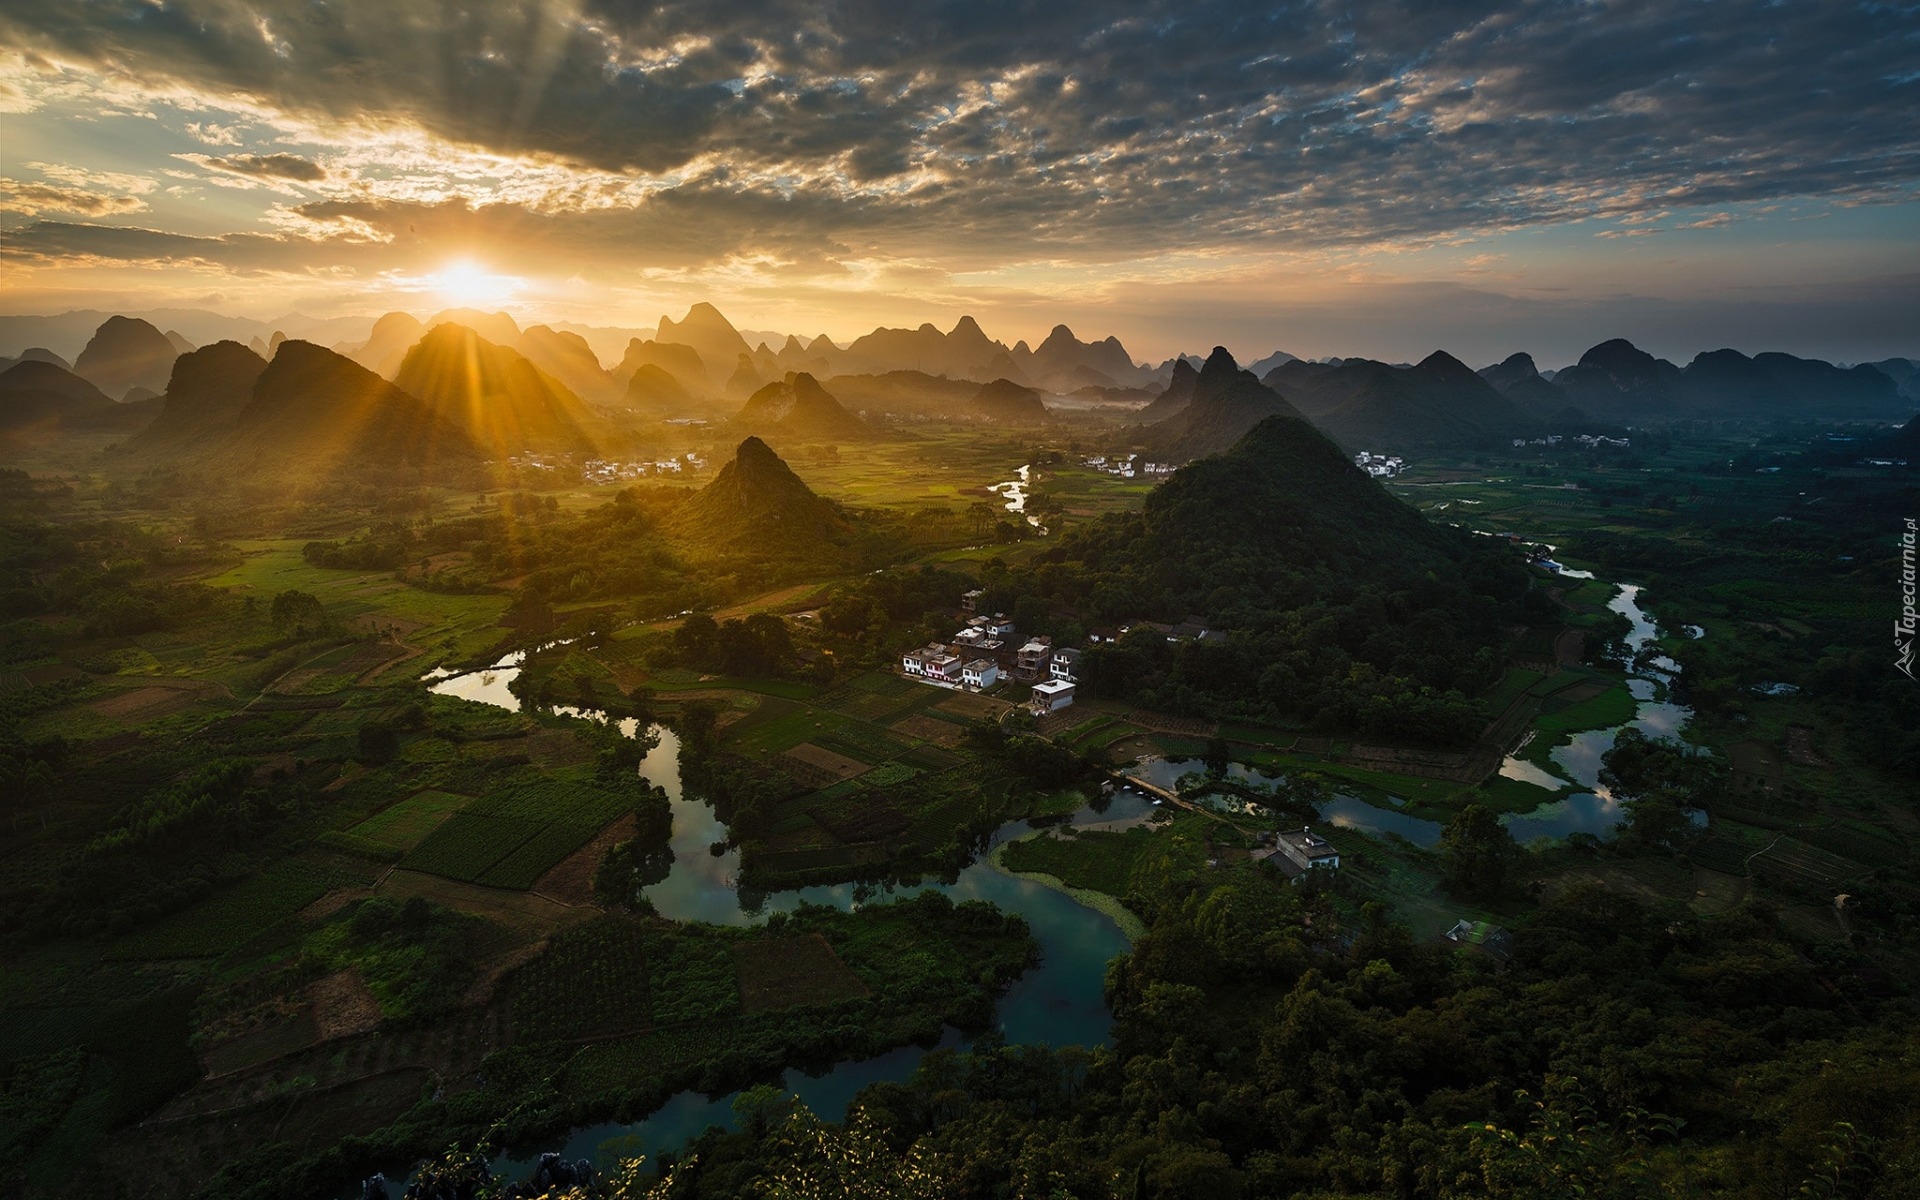 Chiny, Region Kuangsi, Rzeka Gui Jiang, Li River, Promienie słońca, Góry Maoer Shan